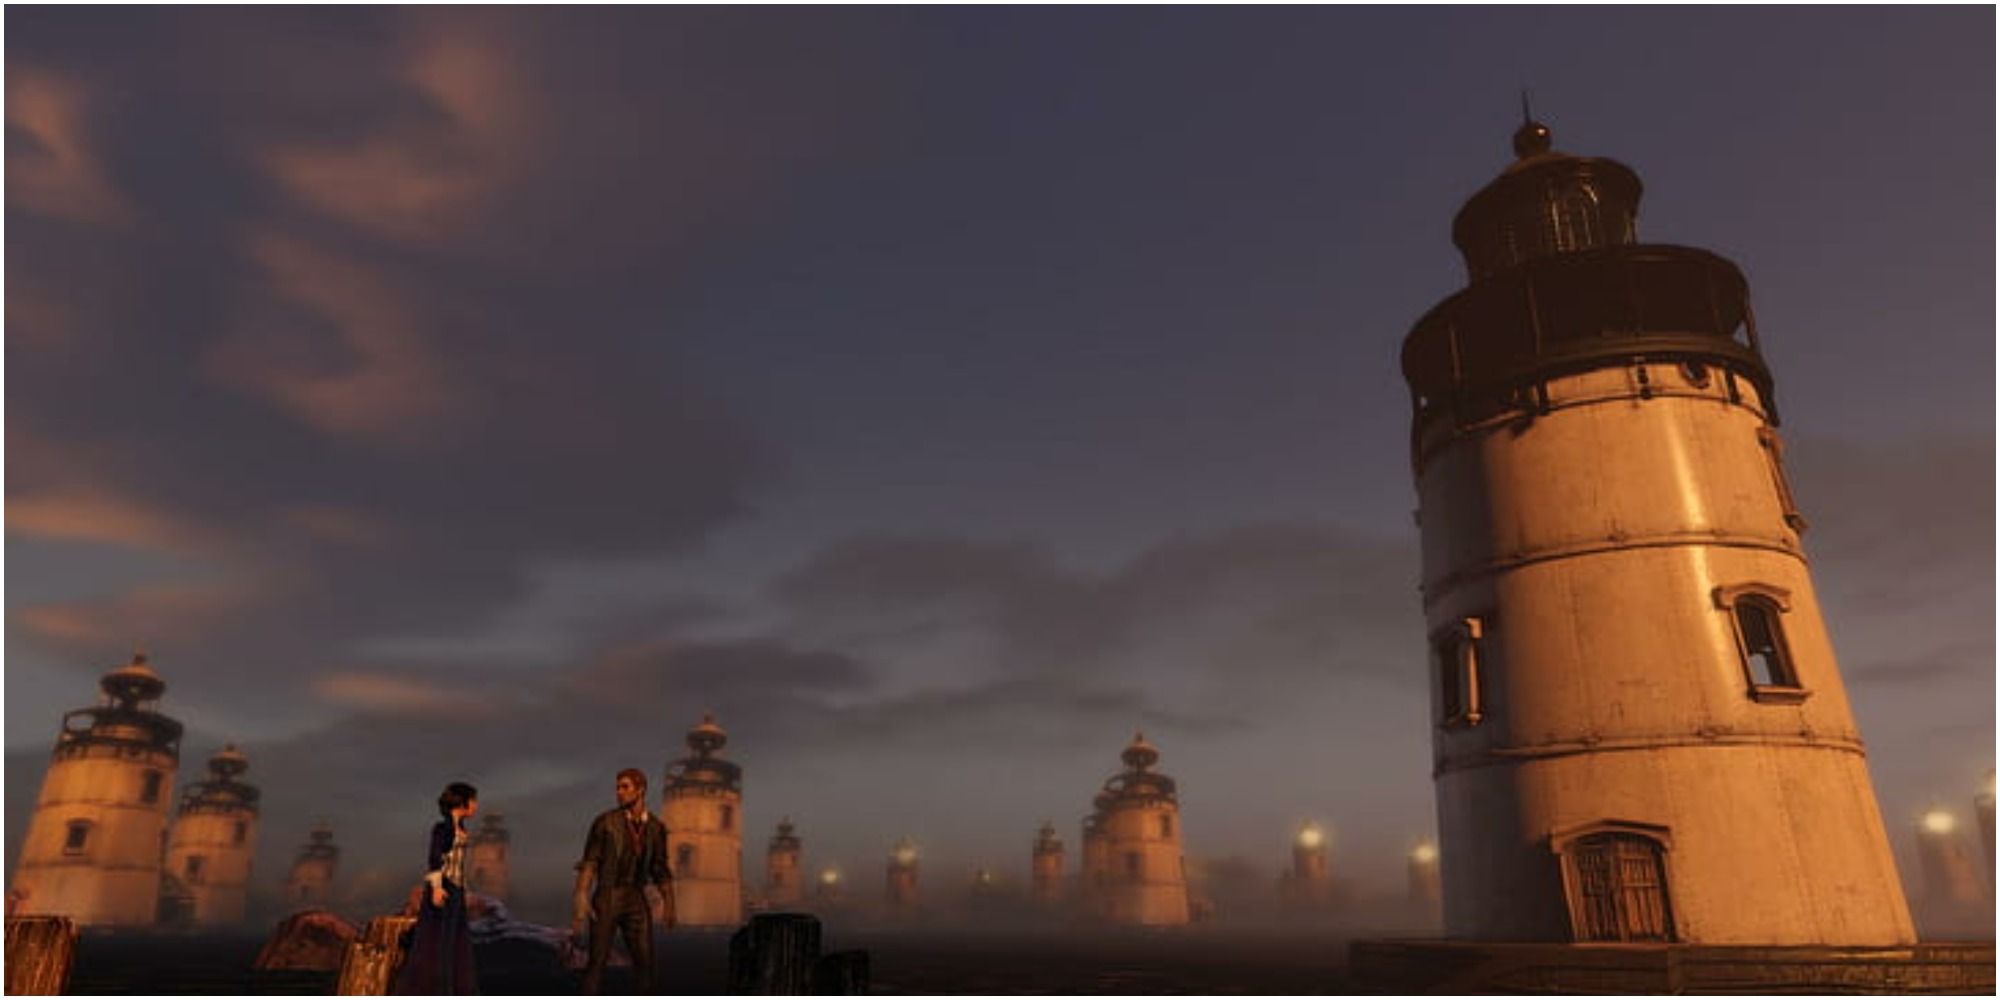 Elizabeth and Booker wander a landscape full of lighthouses in Bioshock